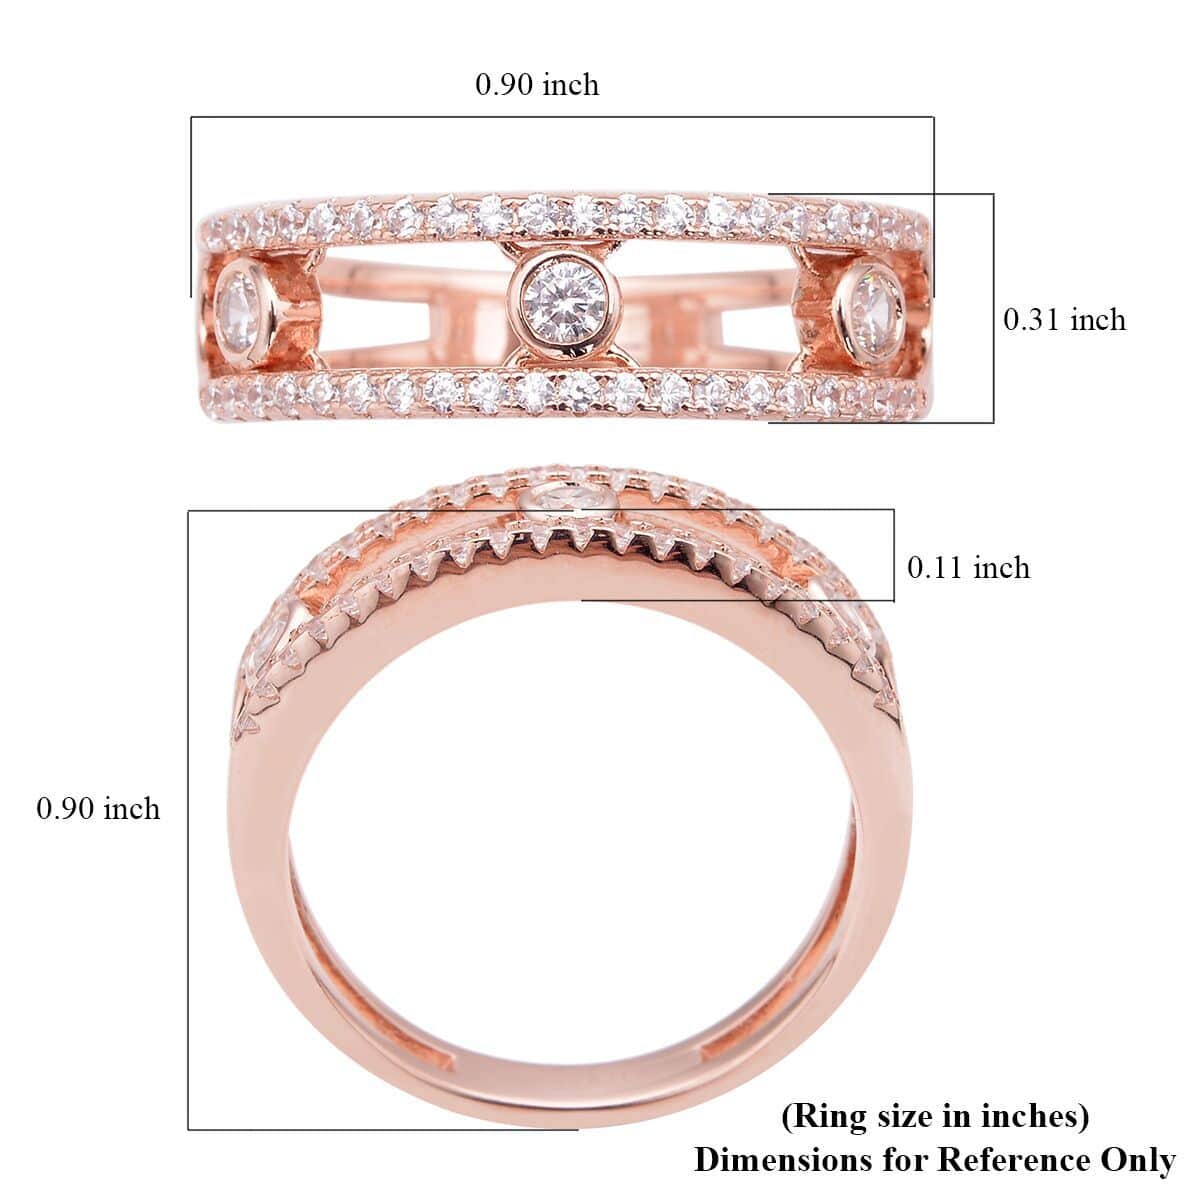 Buy Sliding Simulated Diamond Ring in 14K Rose Gold Over Sterling